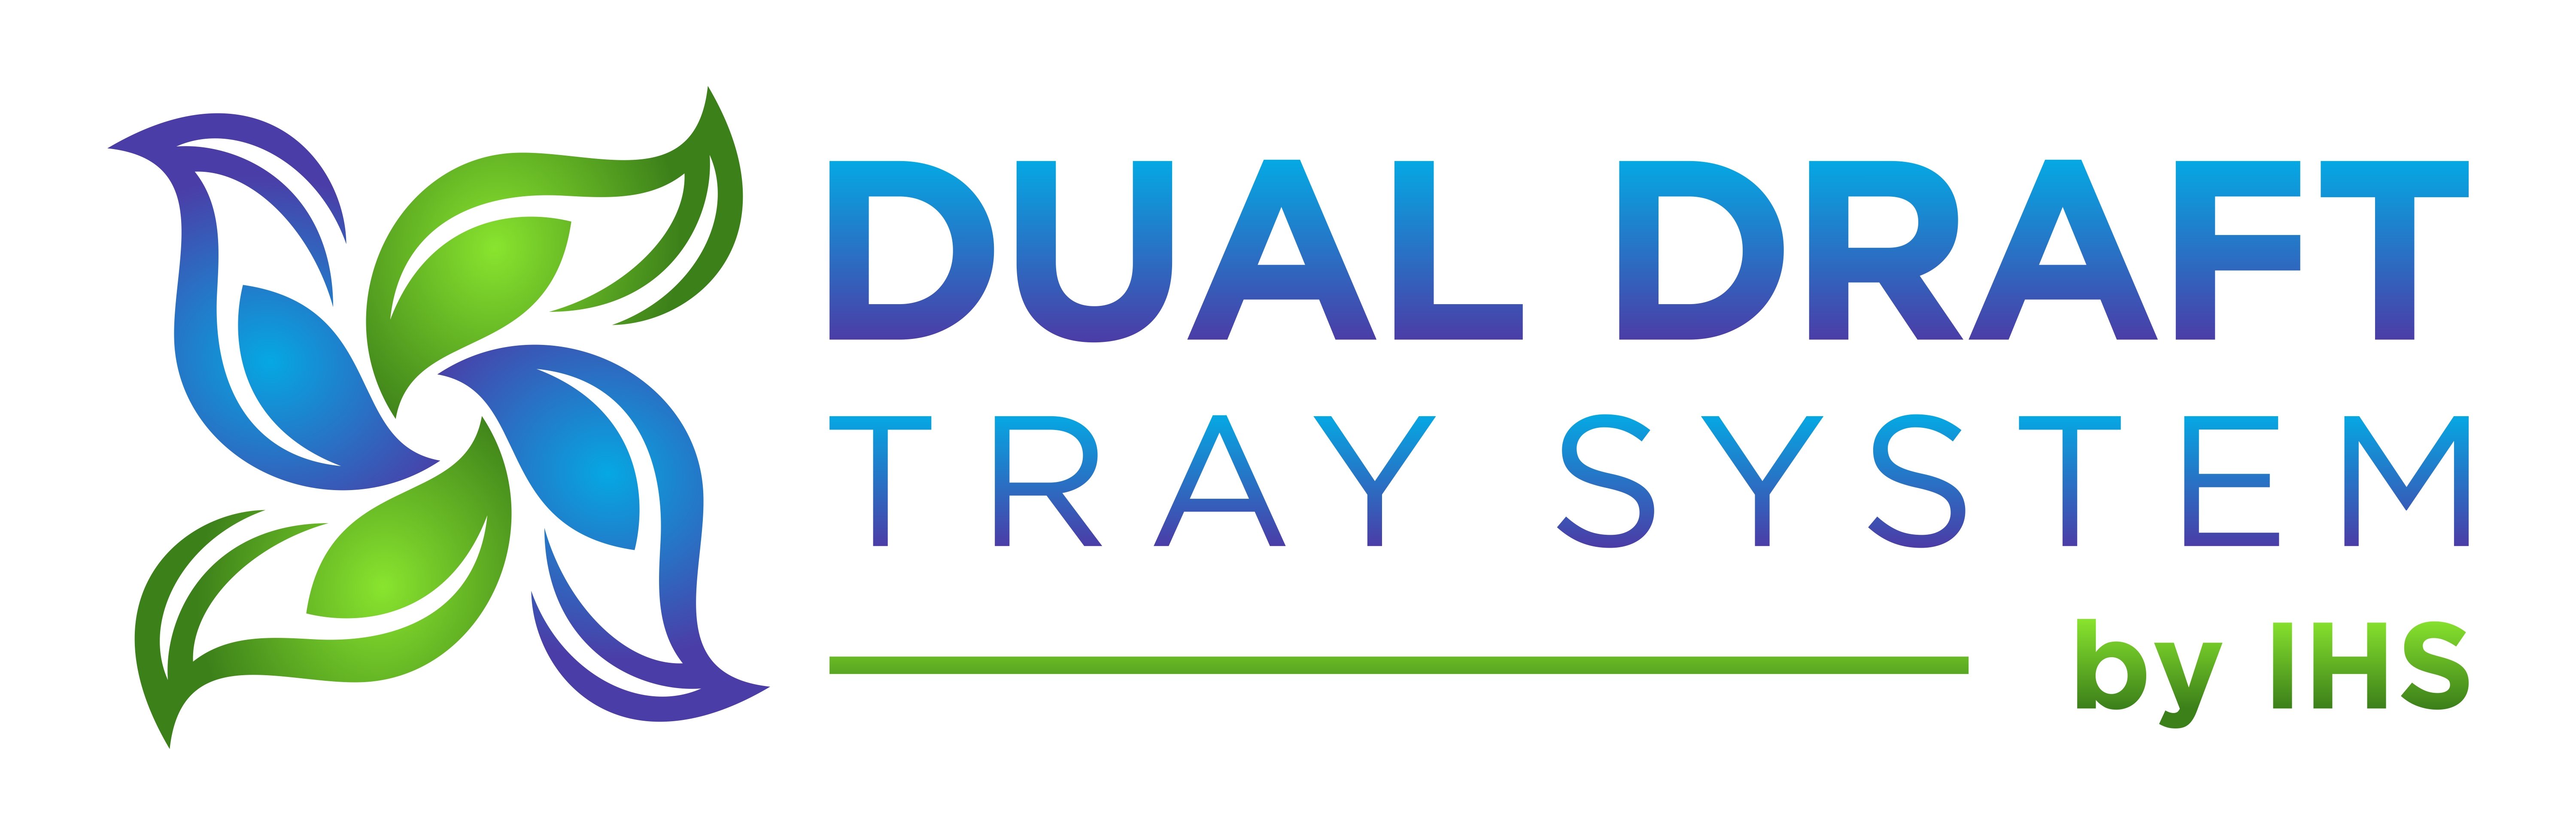 DualDraft - logo final